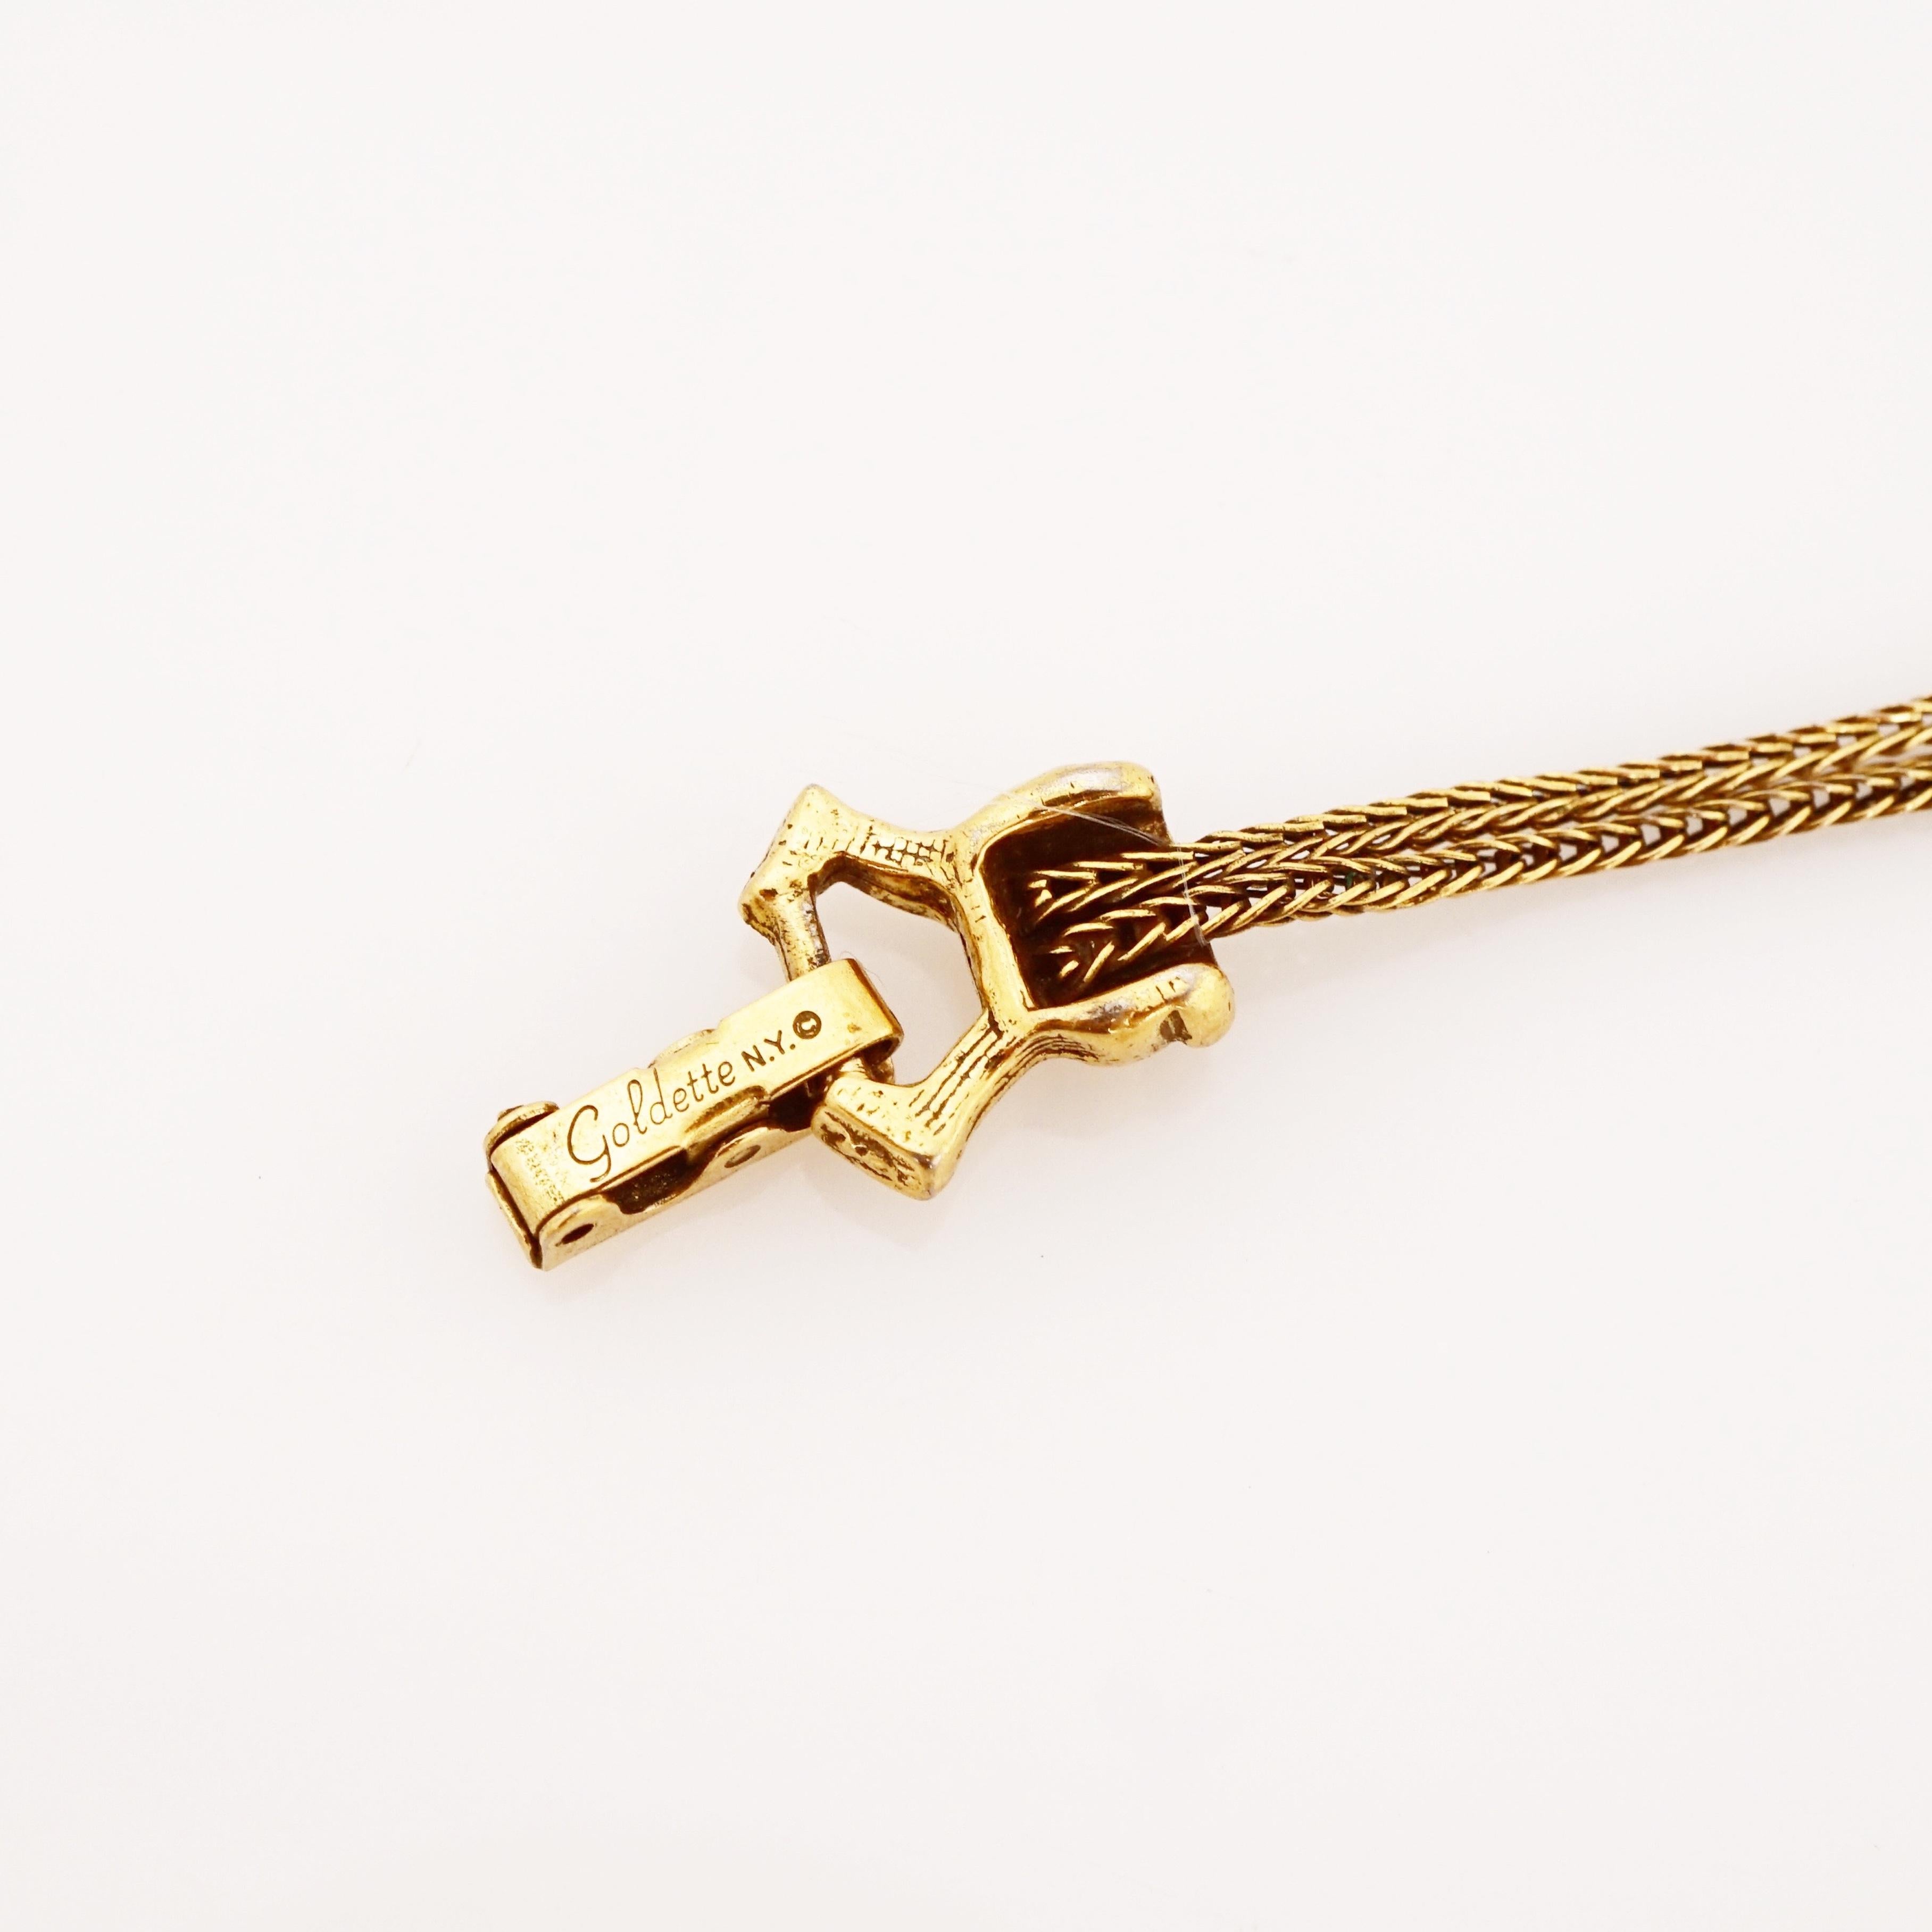 Modern Victorian Revival Slider Charm Bracelet By Goldette, 1960s